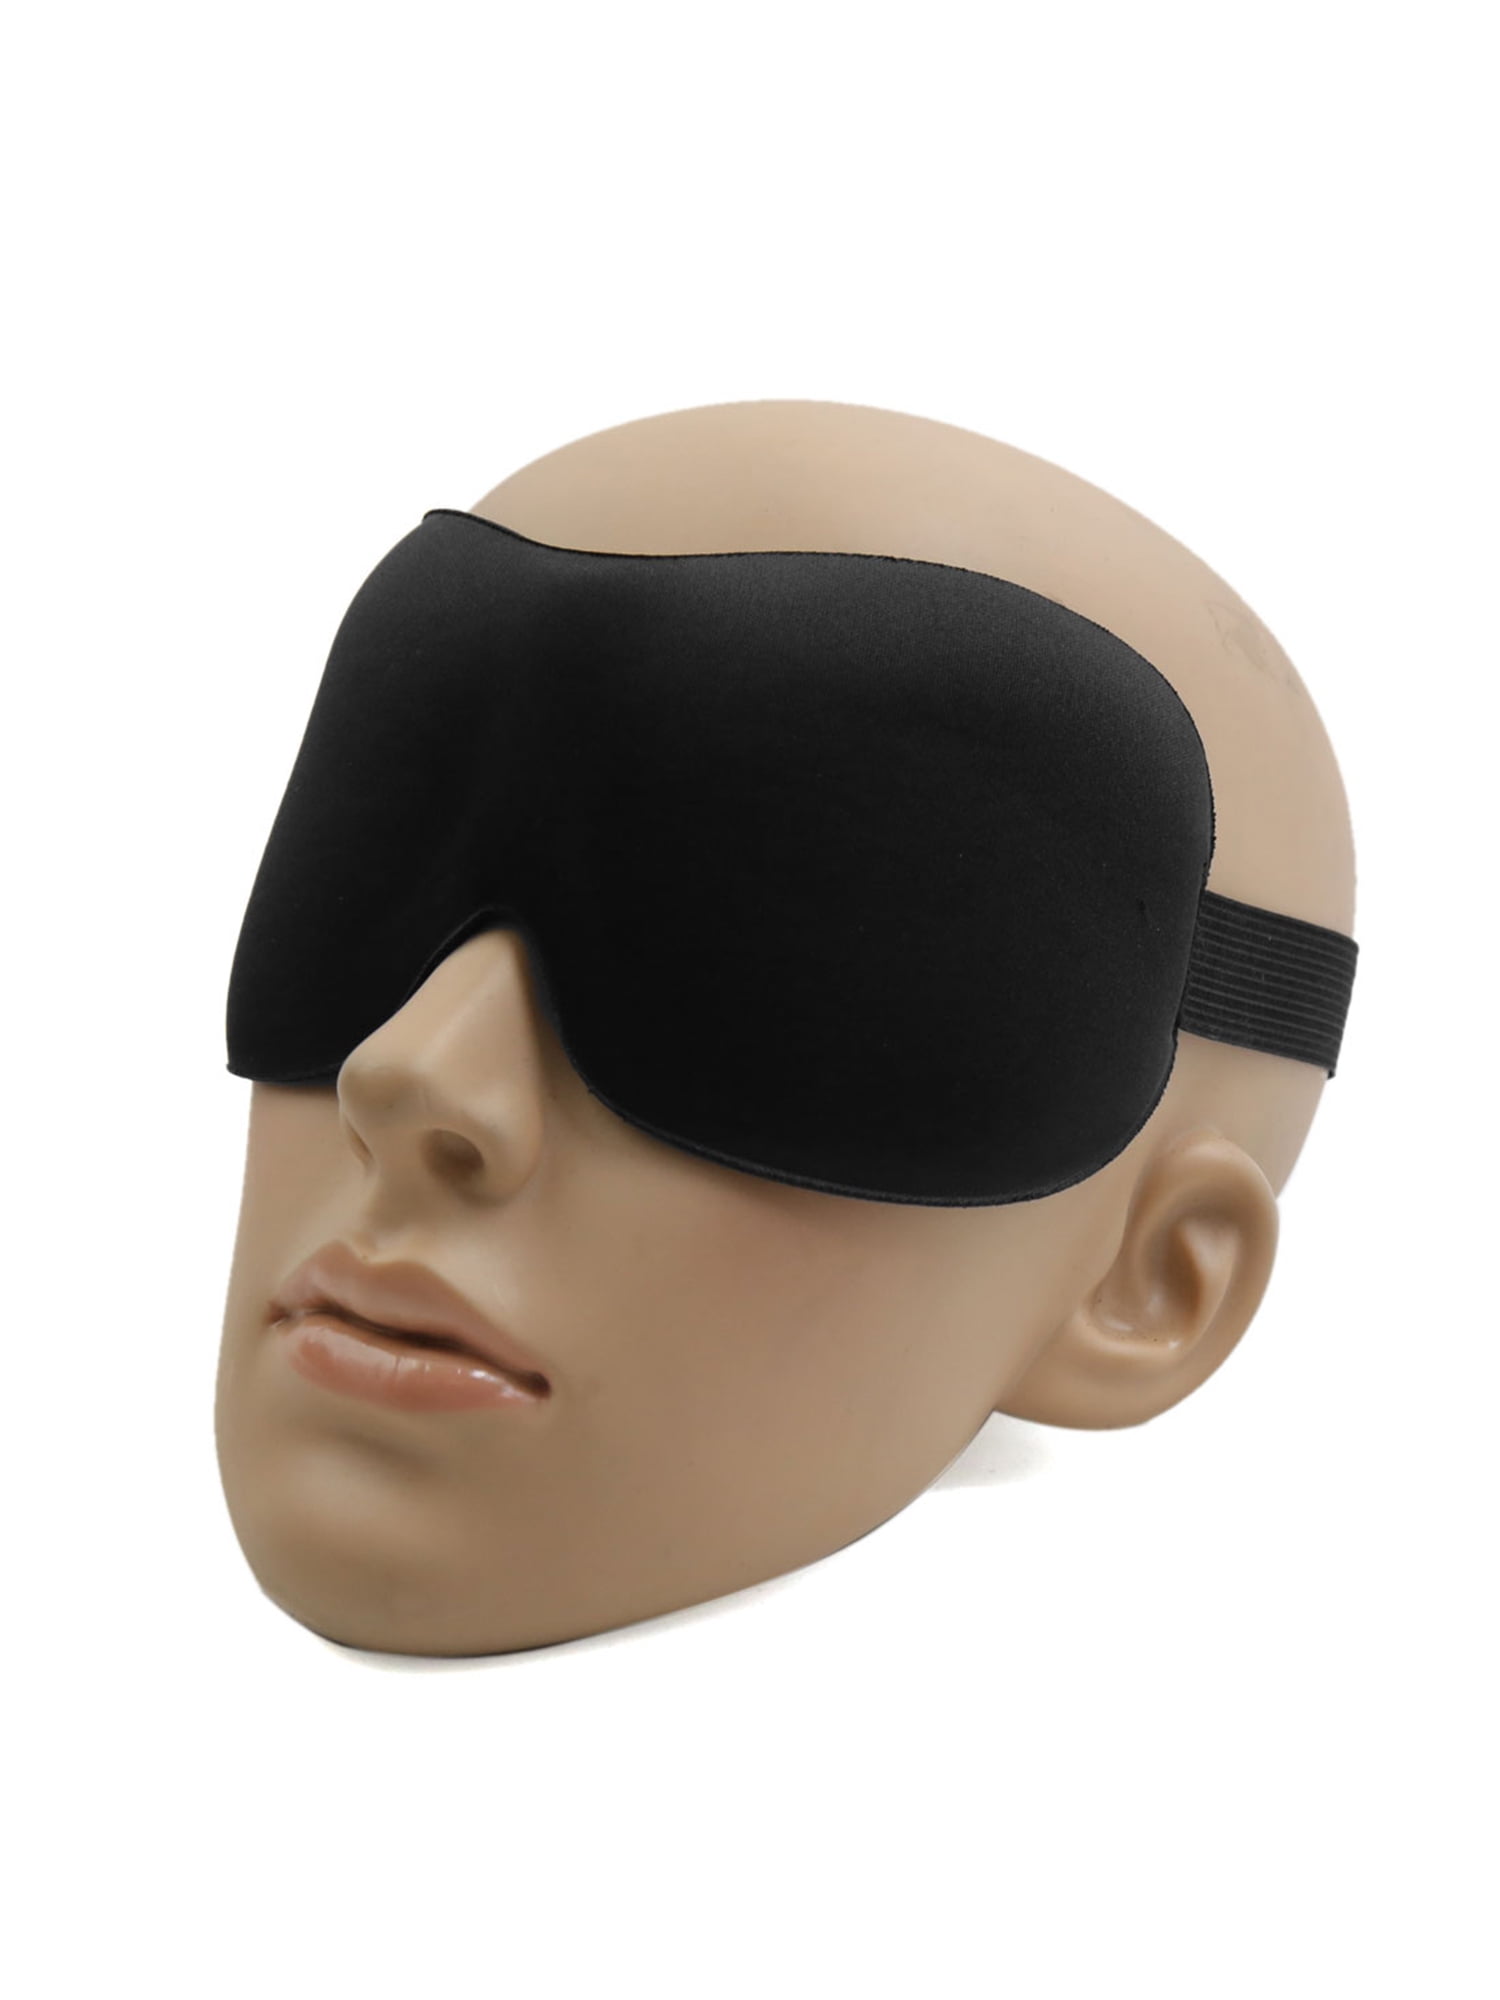 3D Eye Sleeping Mask For Travel Soft Cover Blinder Blindfold Shade Resting Aid 